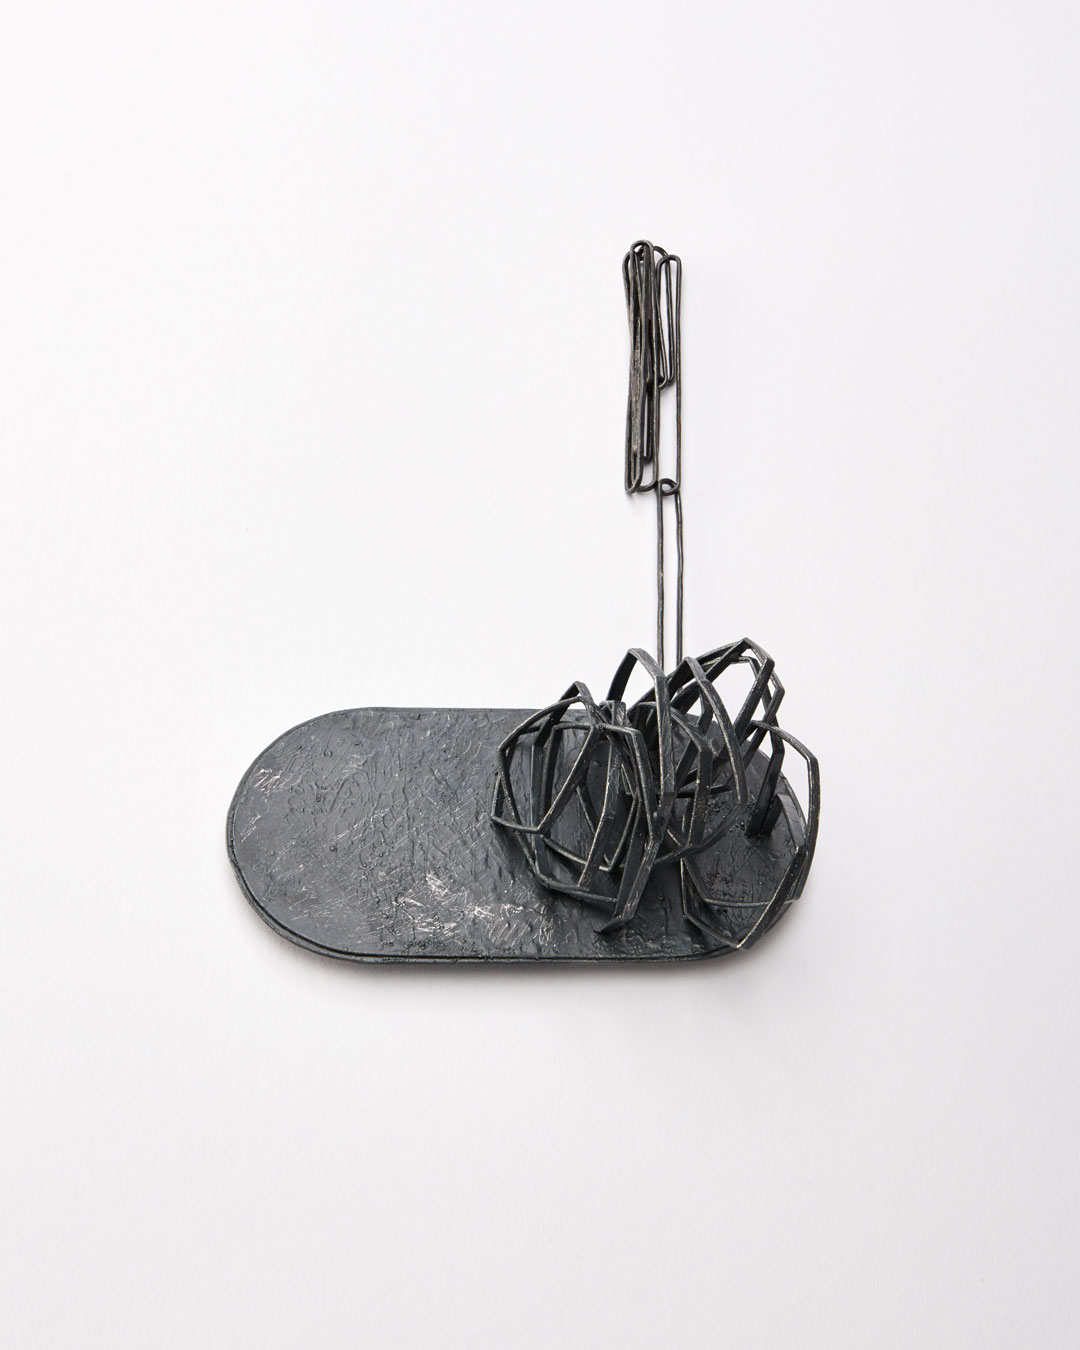 Iris Bodemer, Gegenüberstellung 3 (Juxtapositie 3), 2019, hanger; zilver, thermoplast, 65 x 135 x 50 mm, €4000